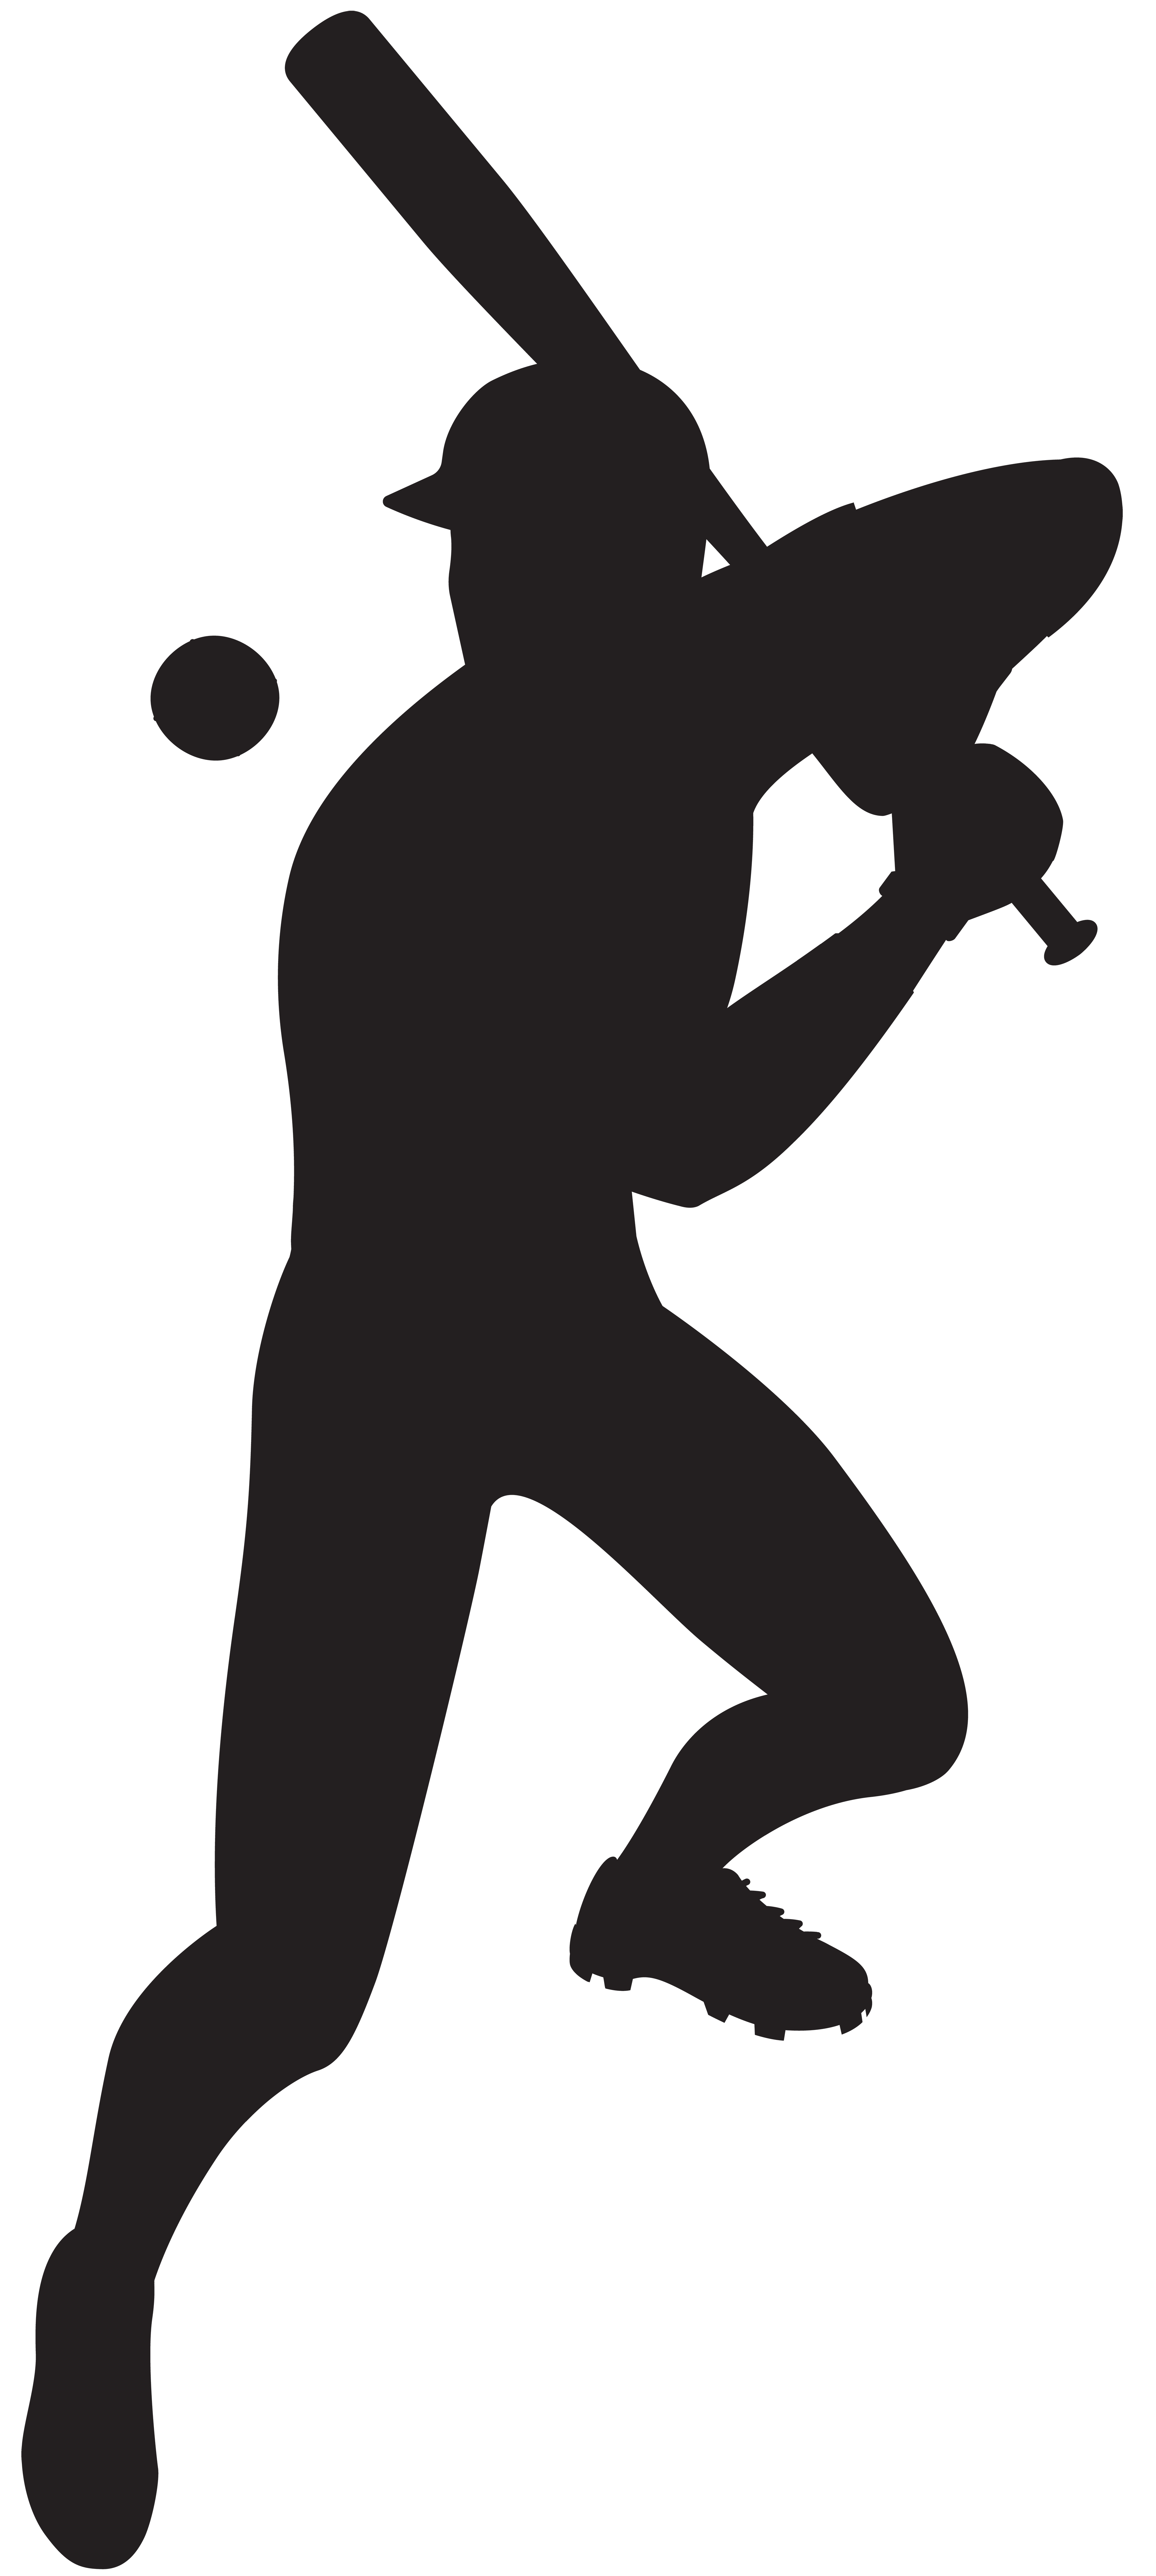 Clipart baseball baseball player. Silhouette clip art image